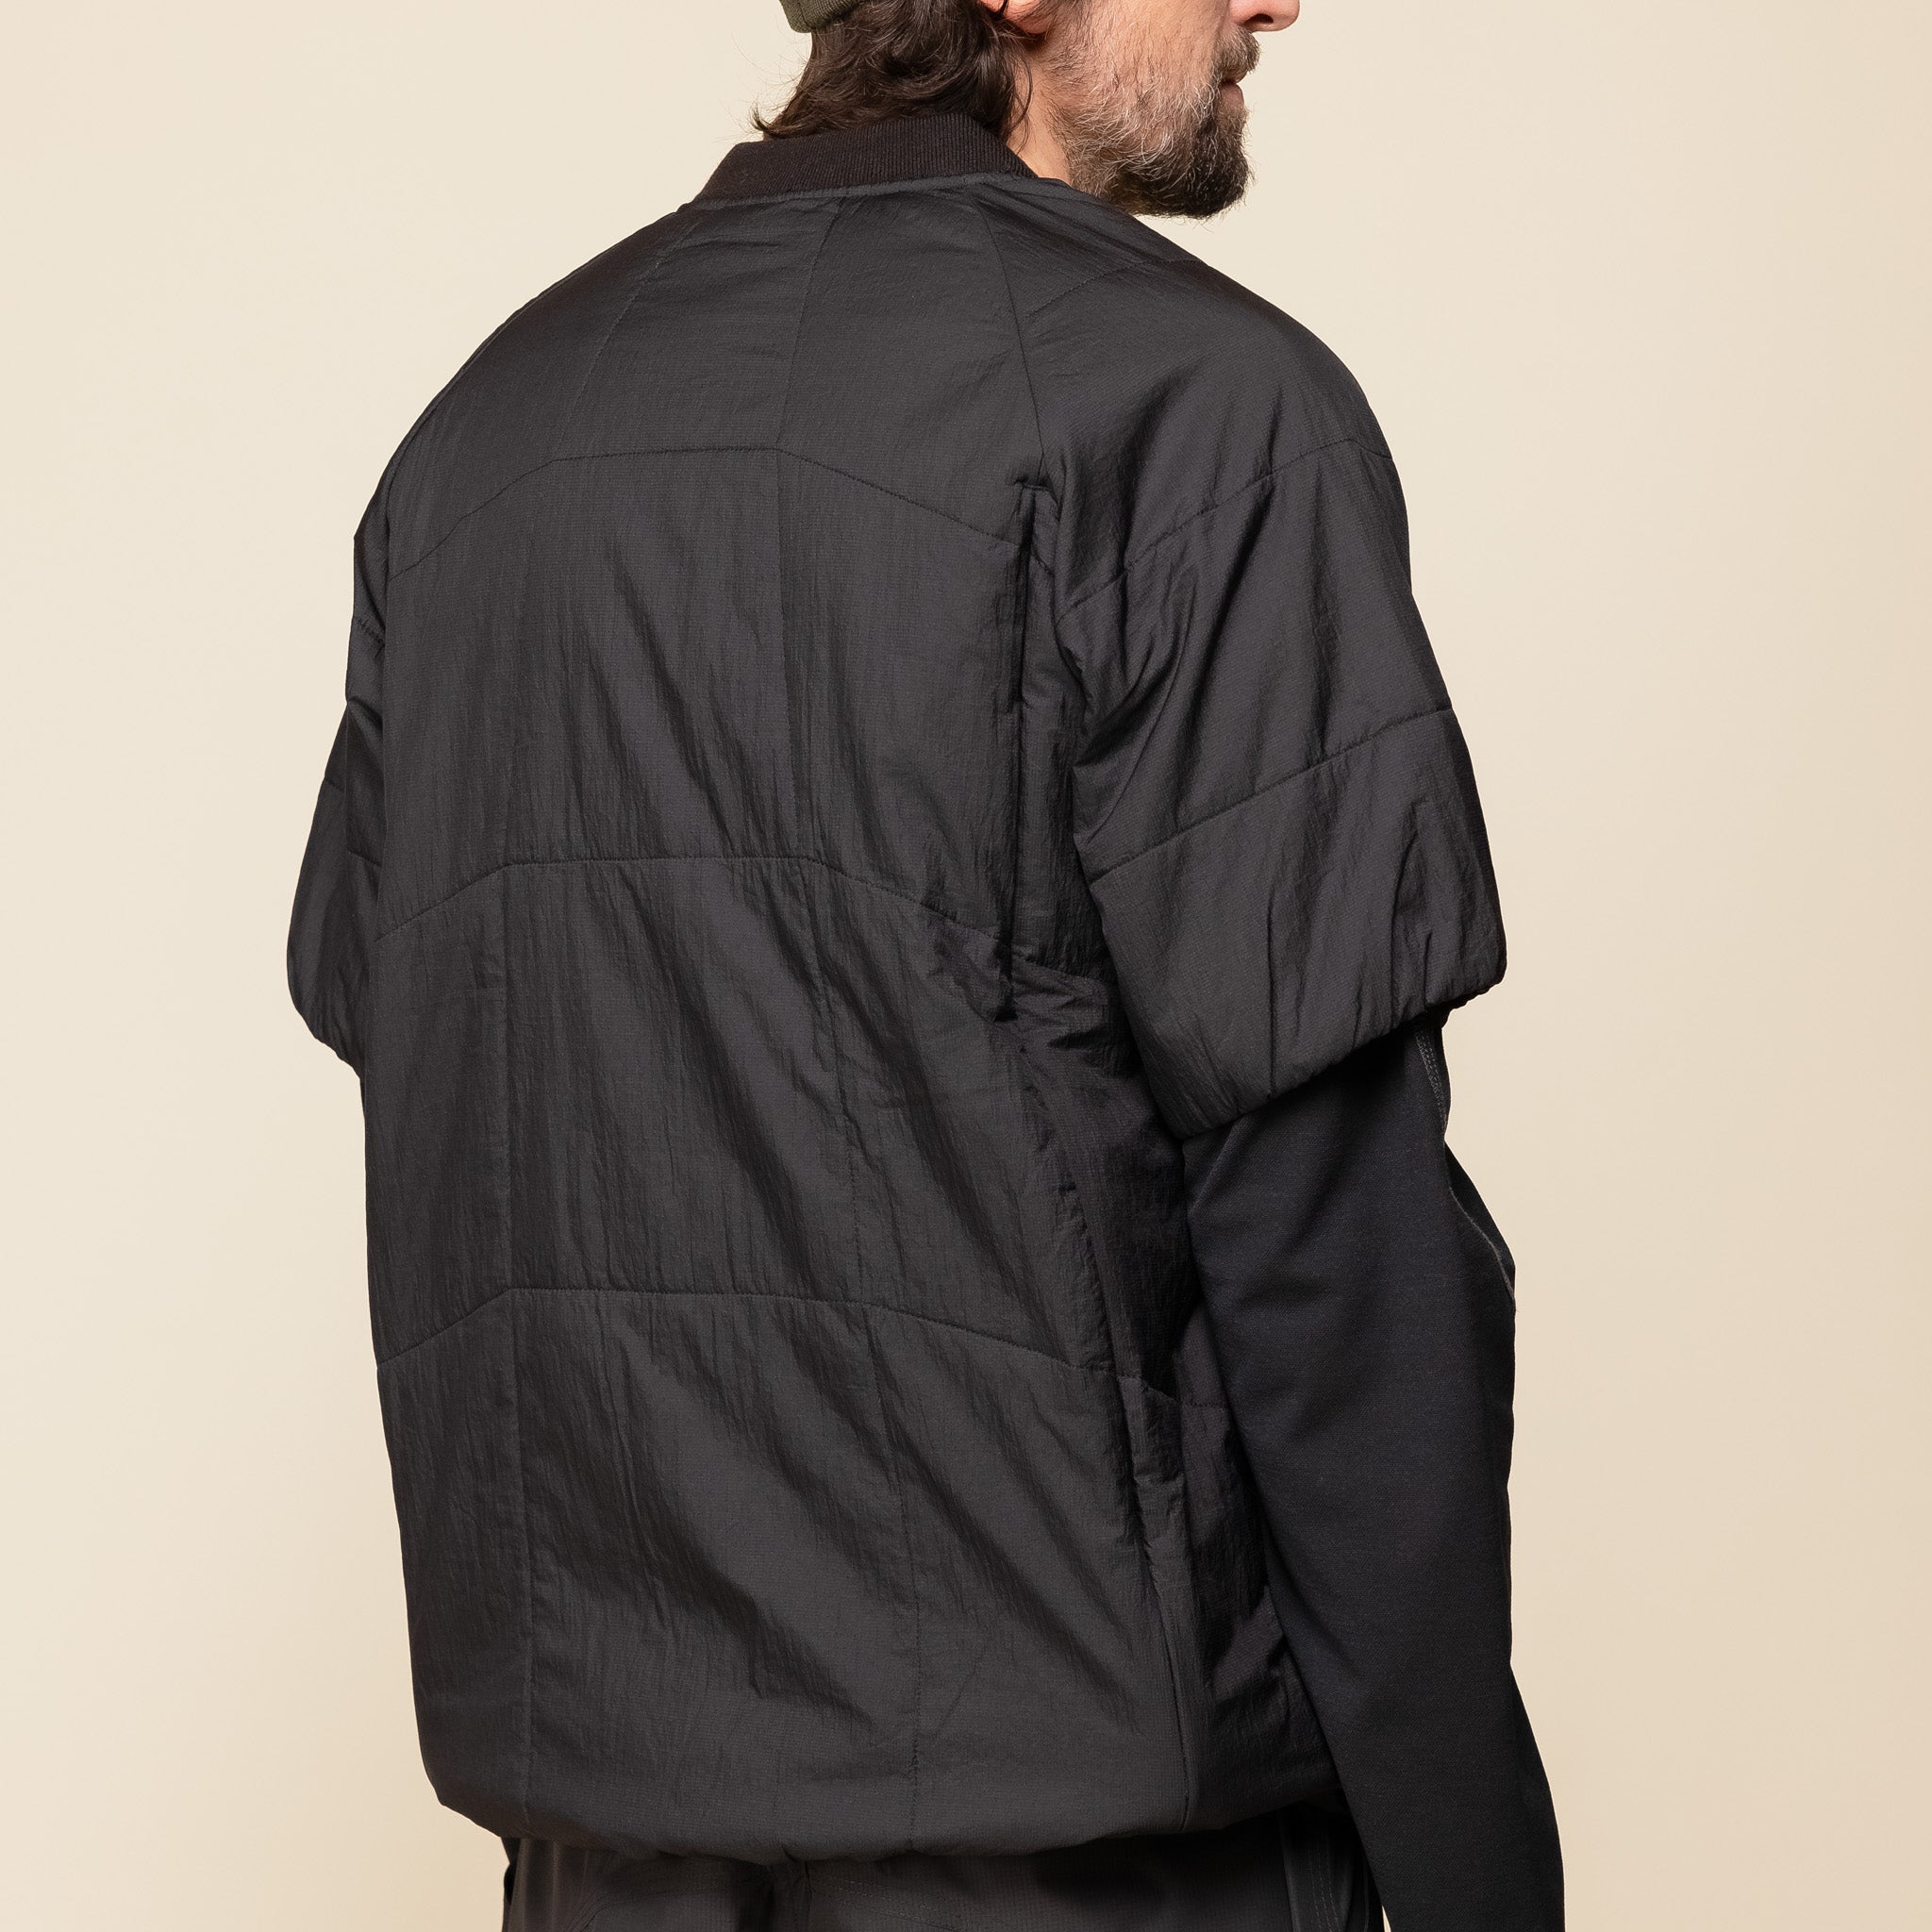 HNDN-027 Norbit by Hiroshi Nozawa - Insulation Inner Bush Short Sleeve T-Shirt Jacket - Black